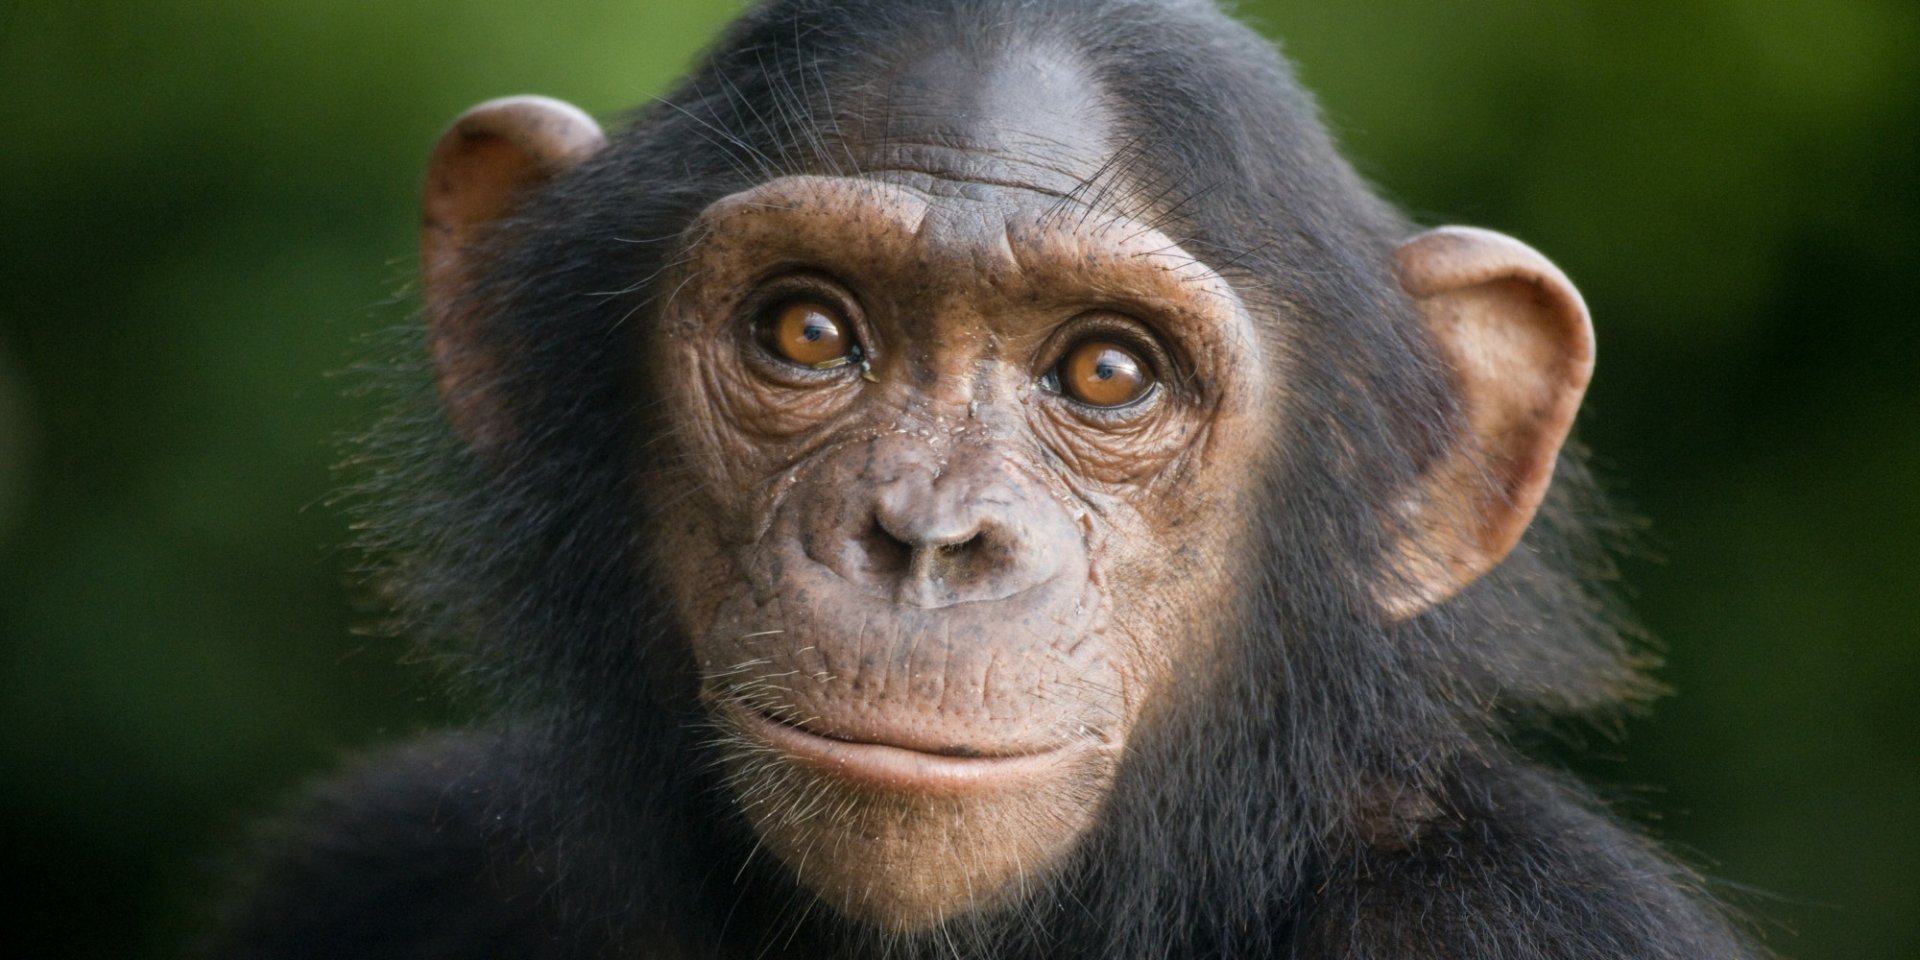 chimpanzee face side view